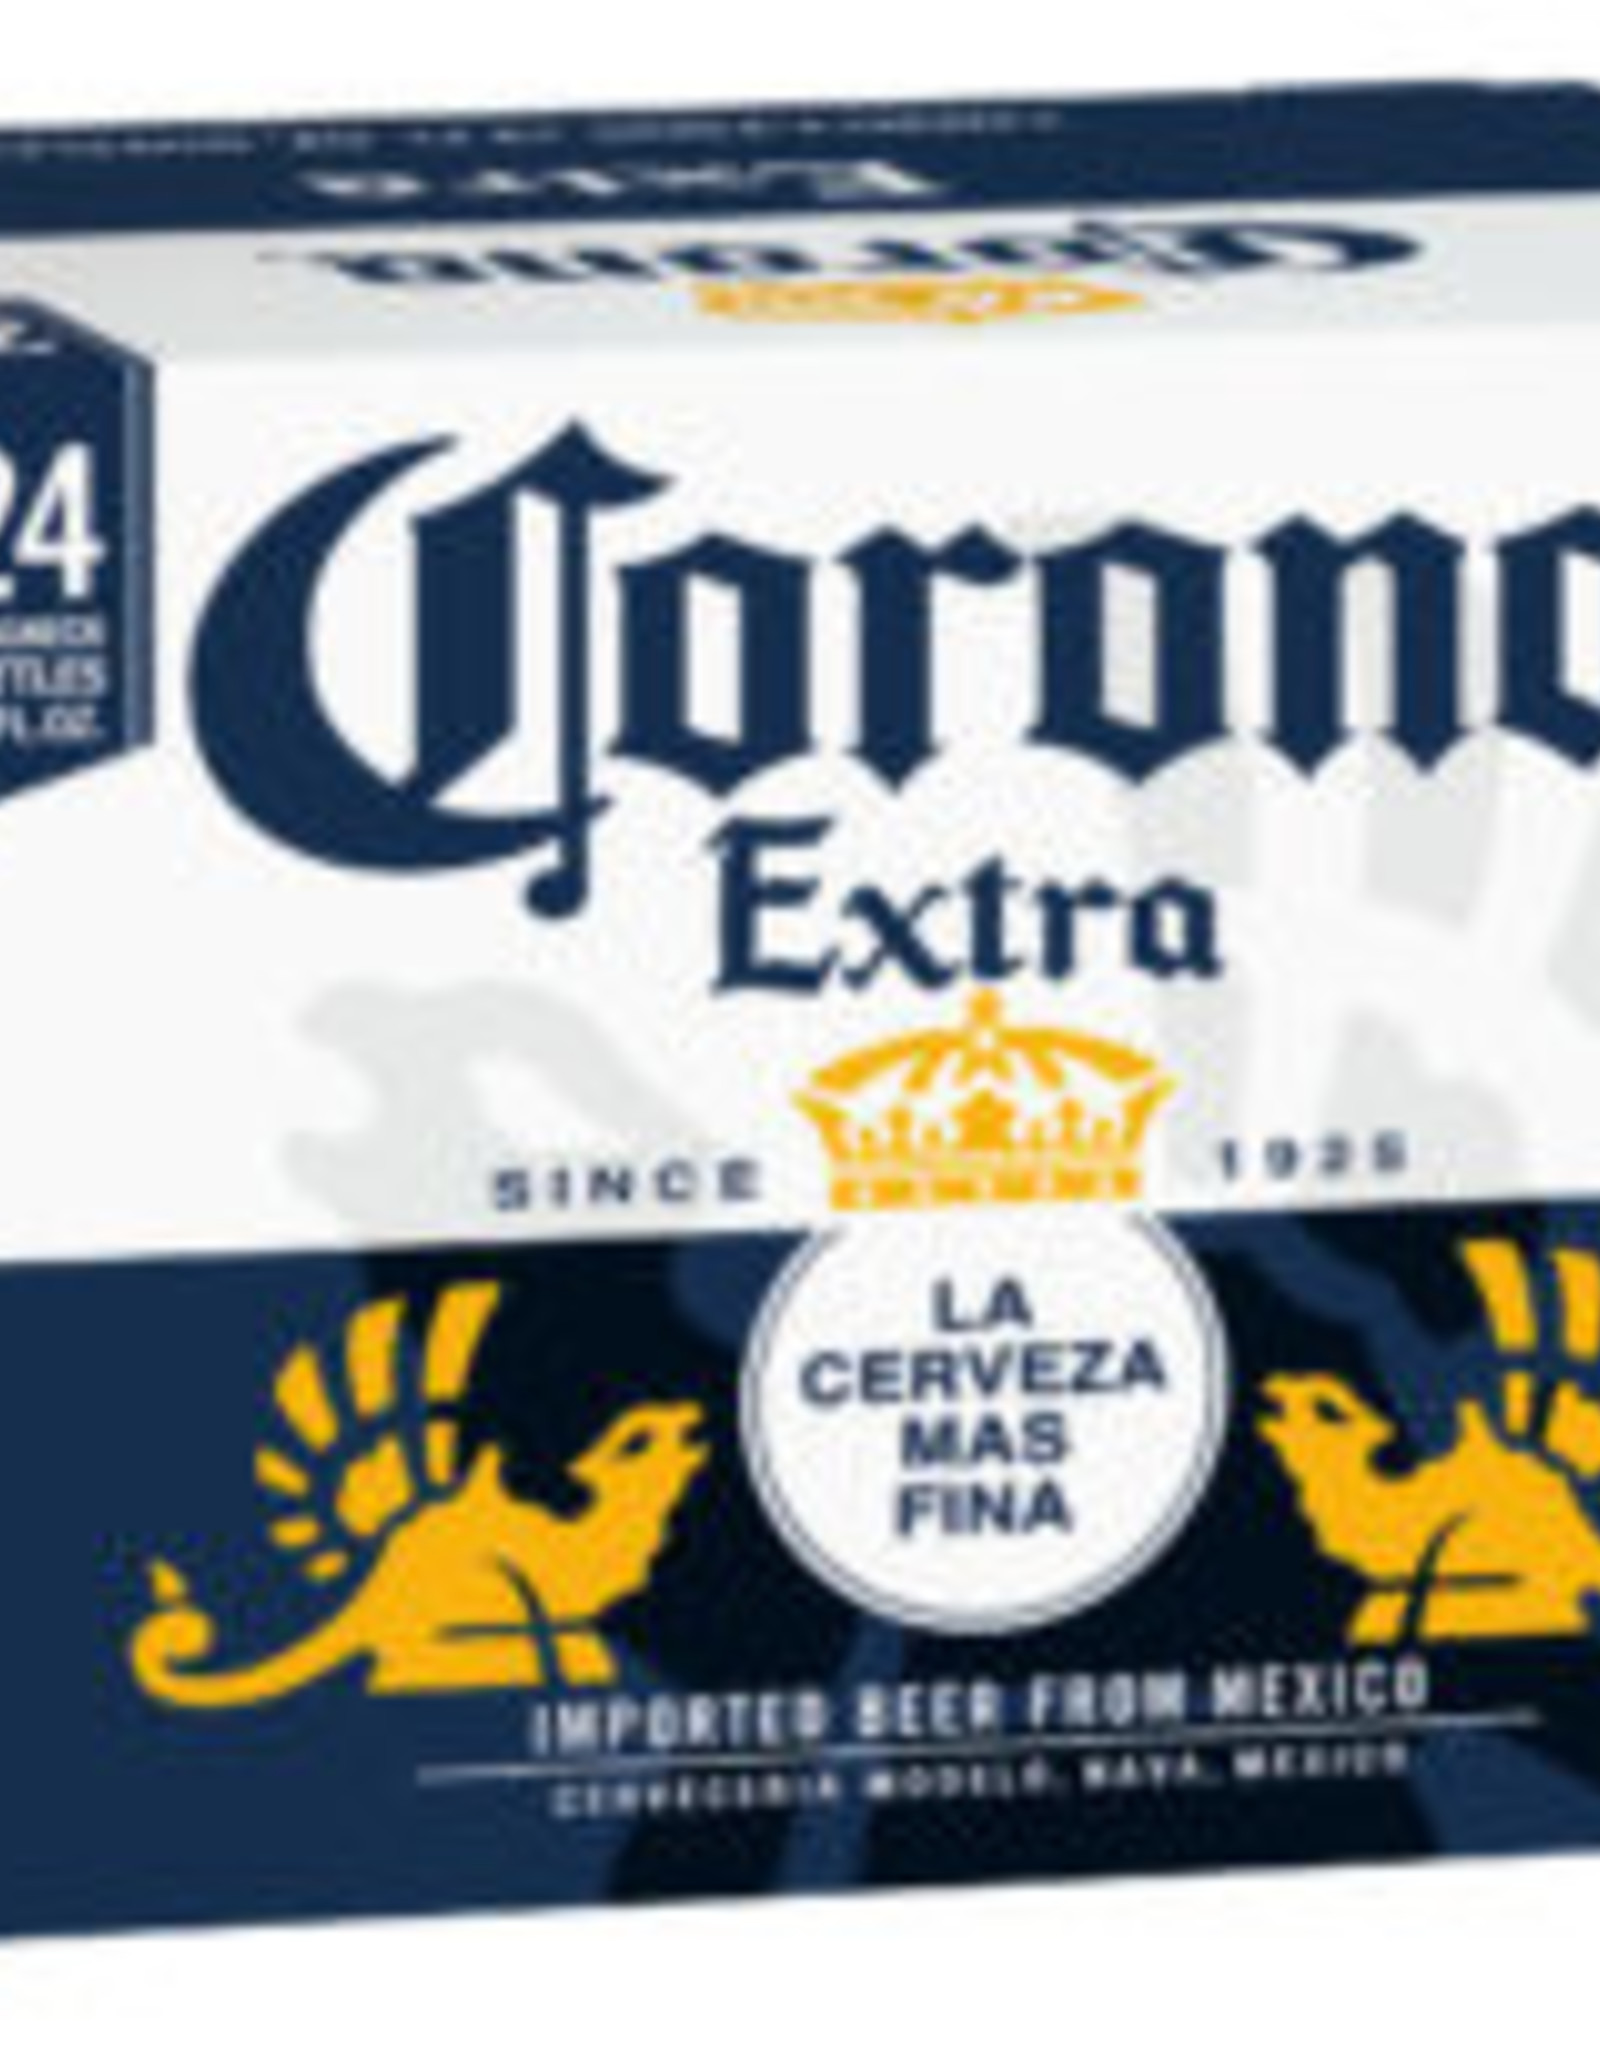 Corona Extra 24x12 oz bottles